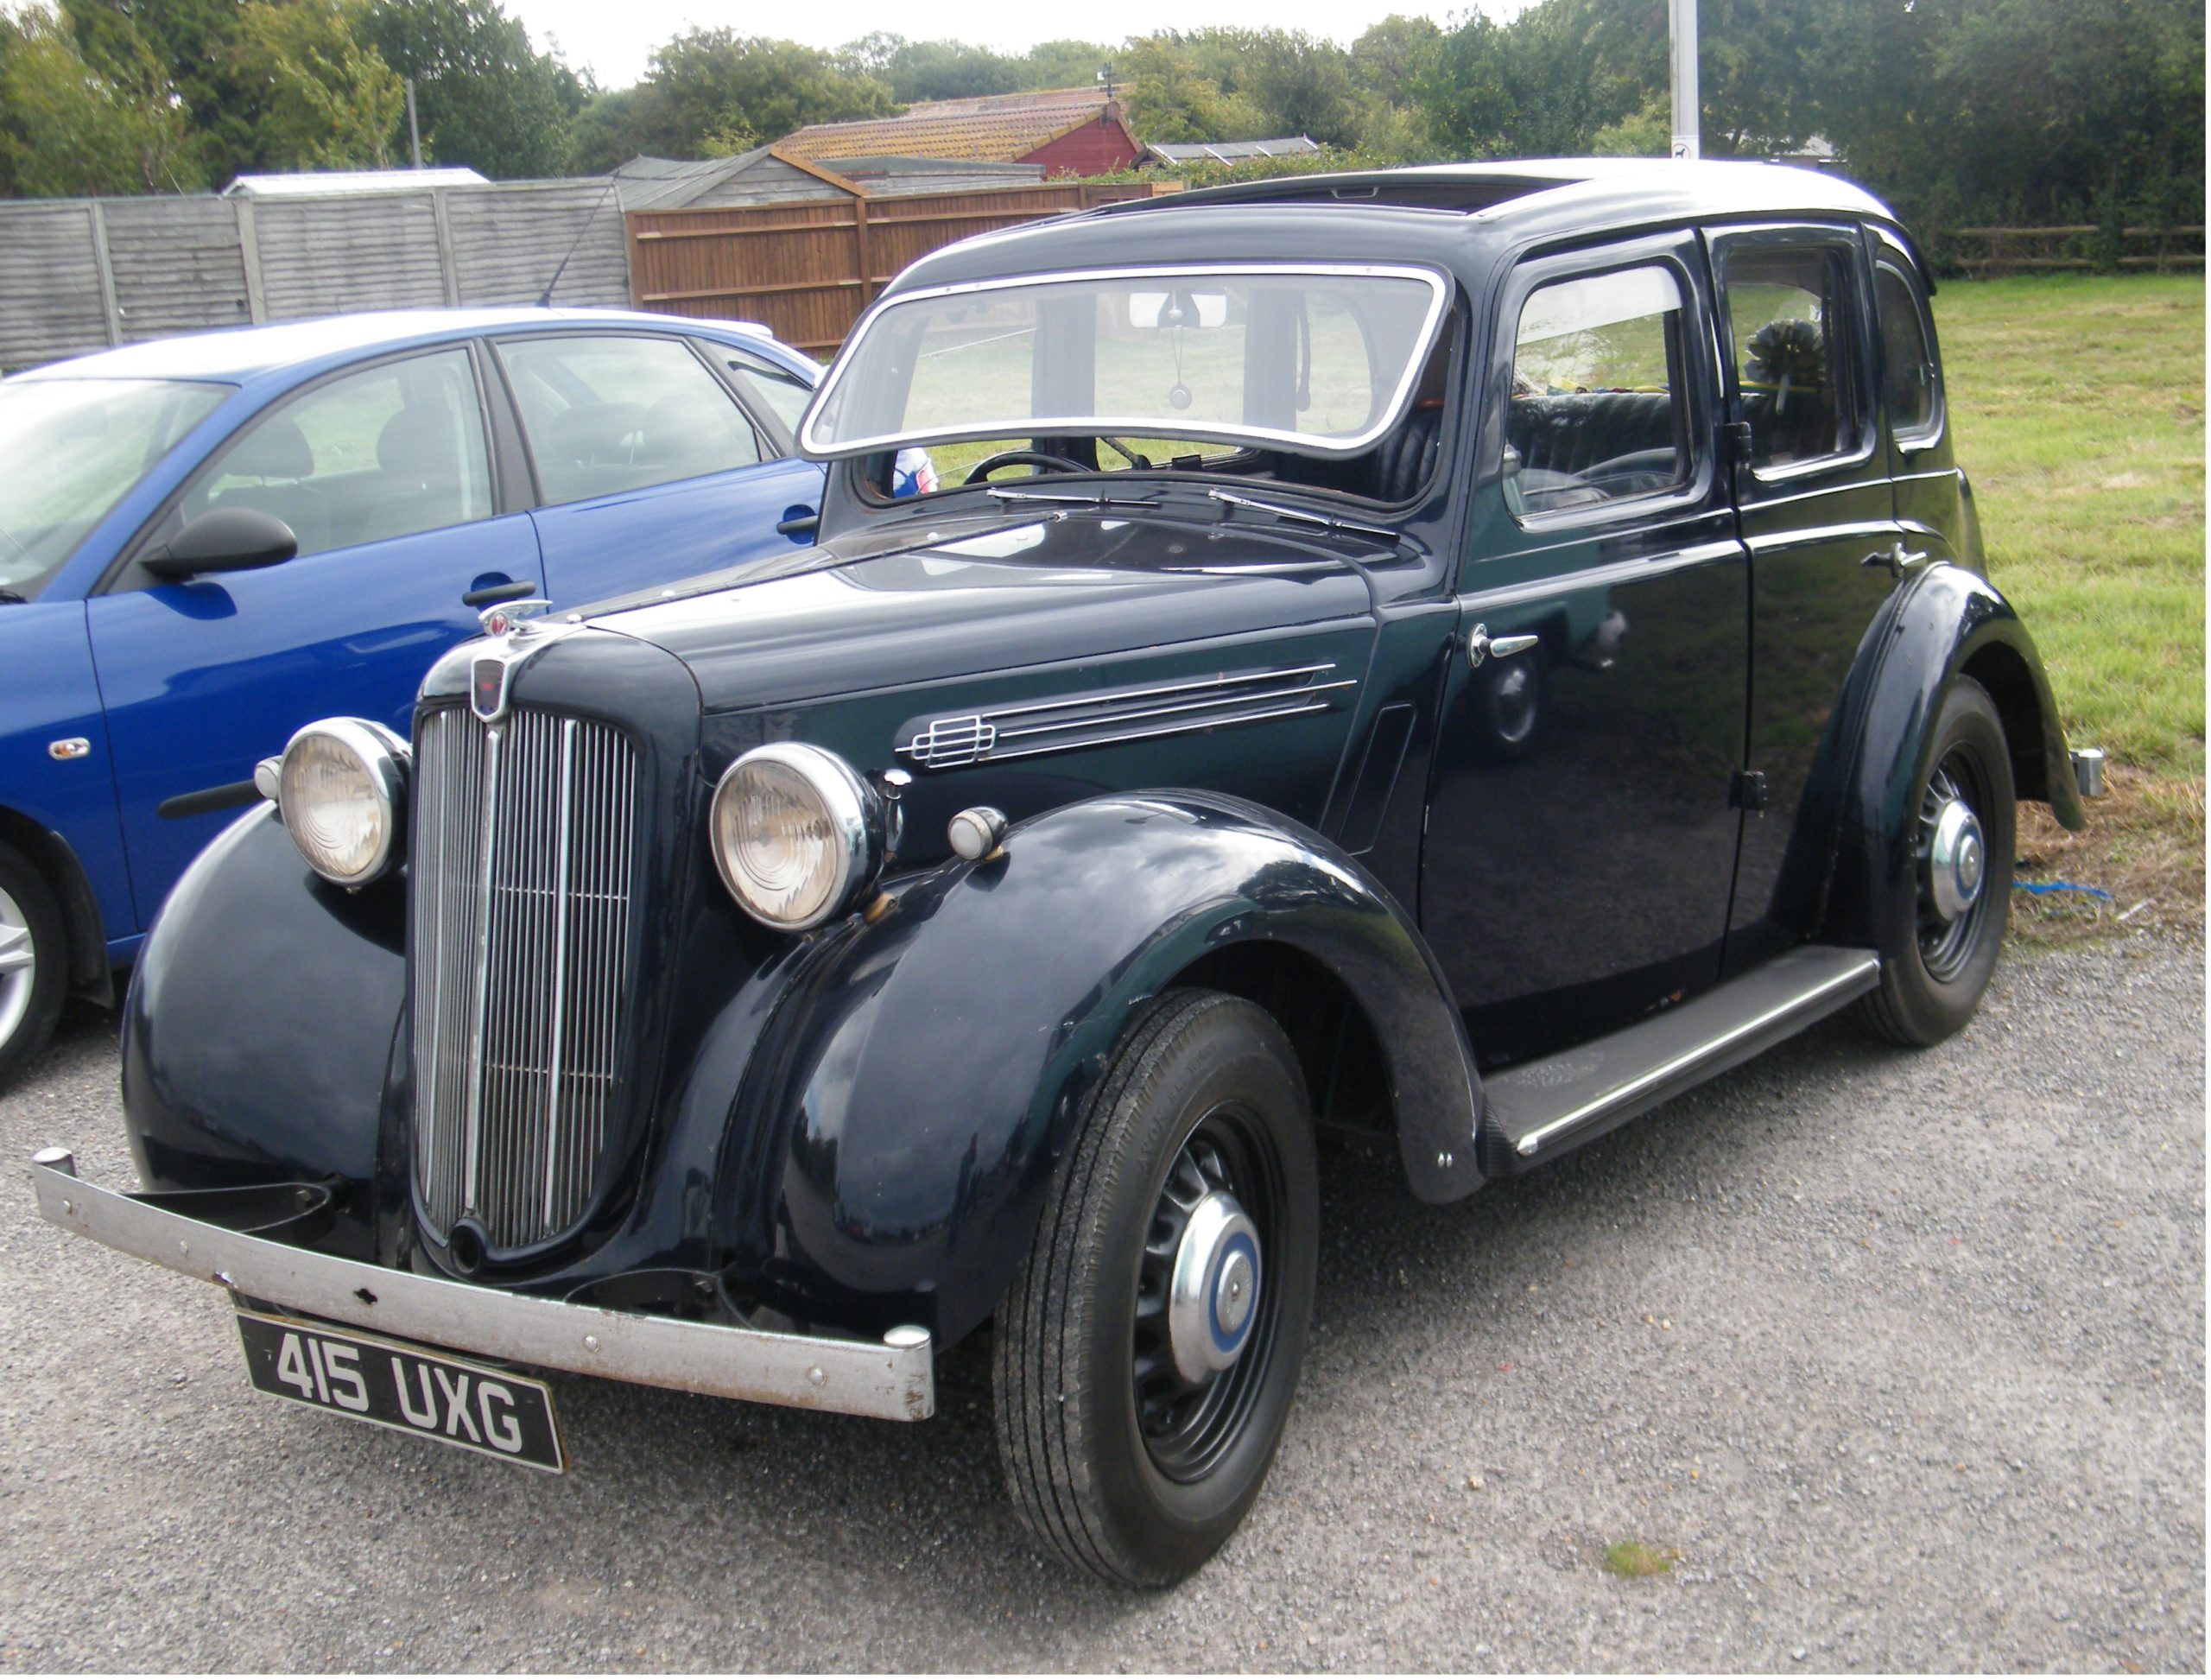 1930s, classic cars, Morris